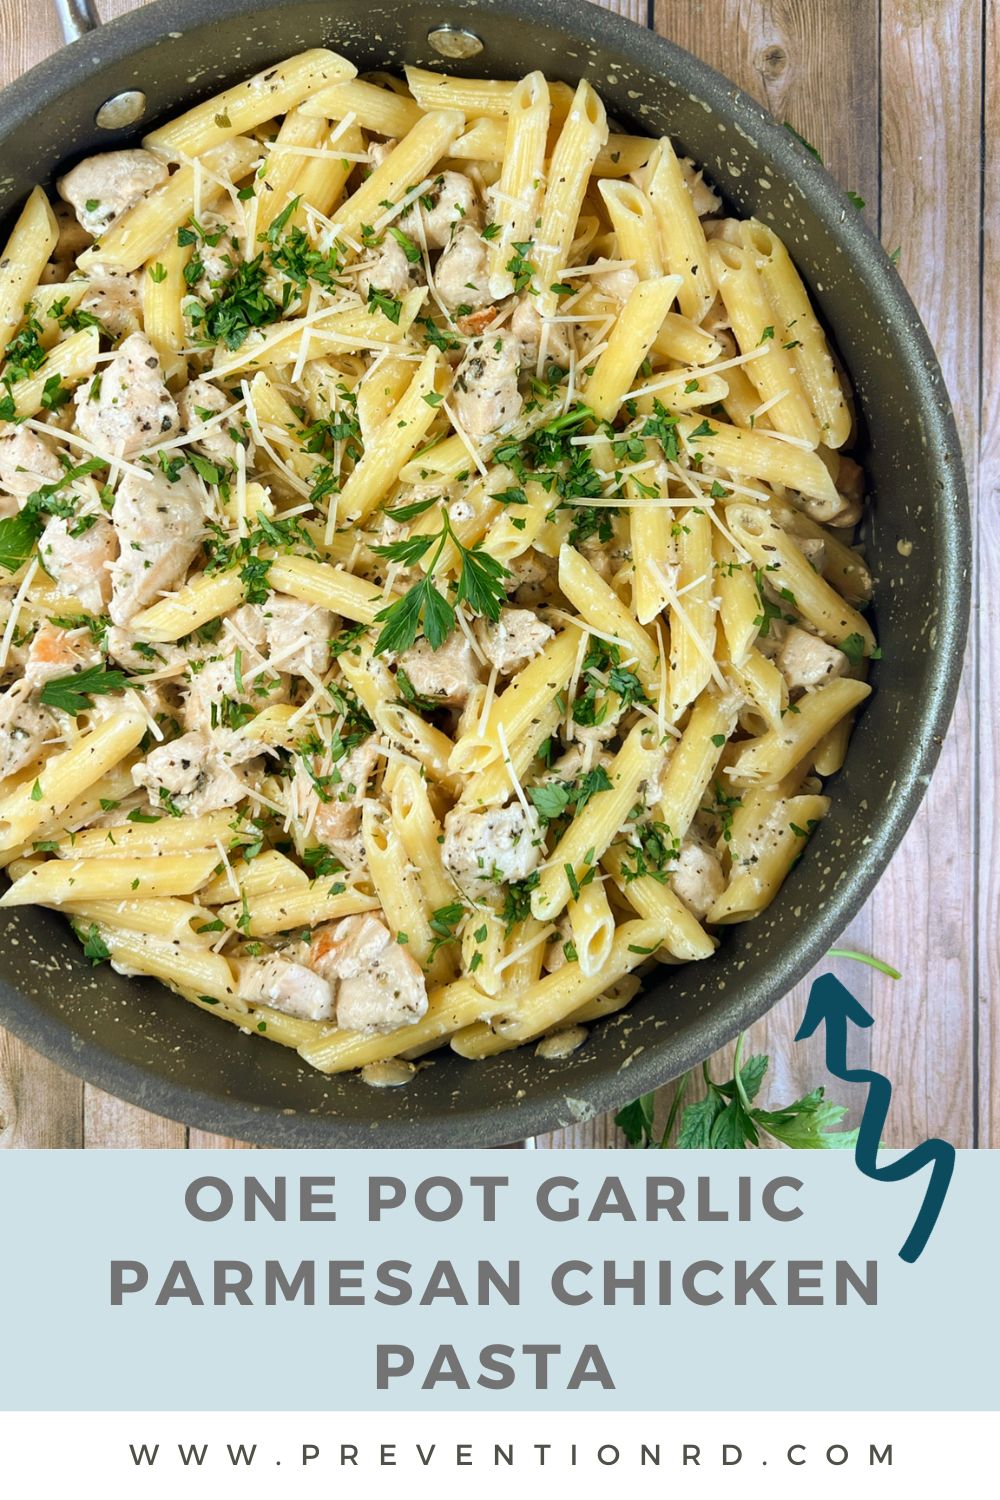 One Pot Garlic Parmesan Chicken Pasta via @preventionrd